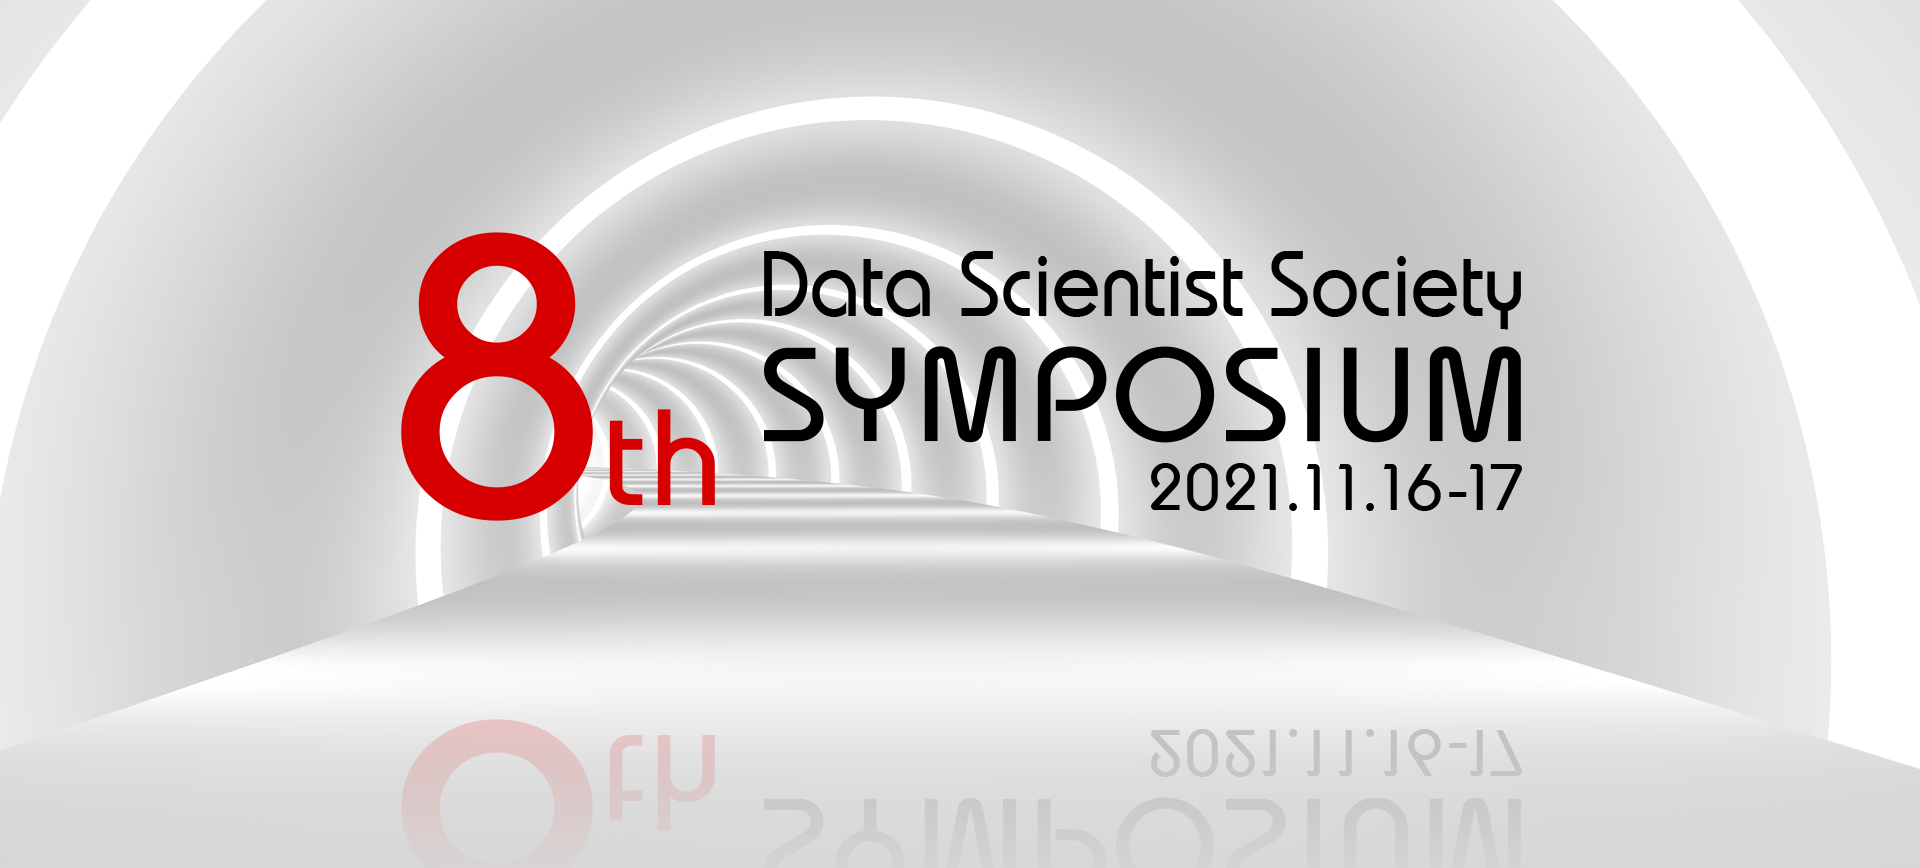 DataScientis Society SYMPOSIUM 8th 2021.11.16 - 11.17